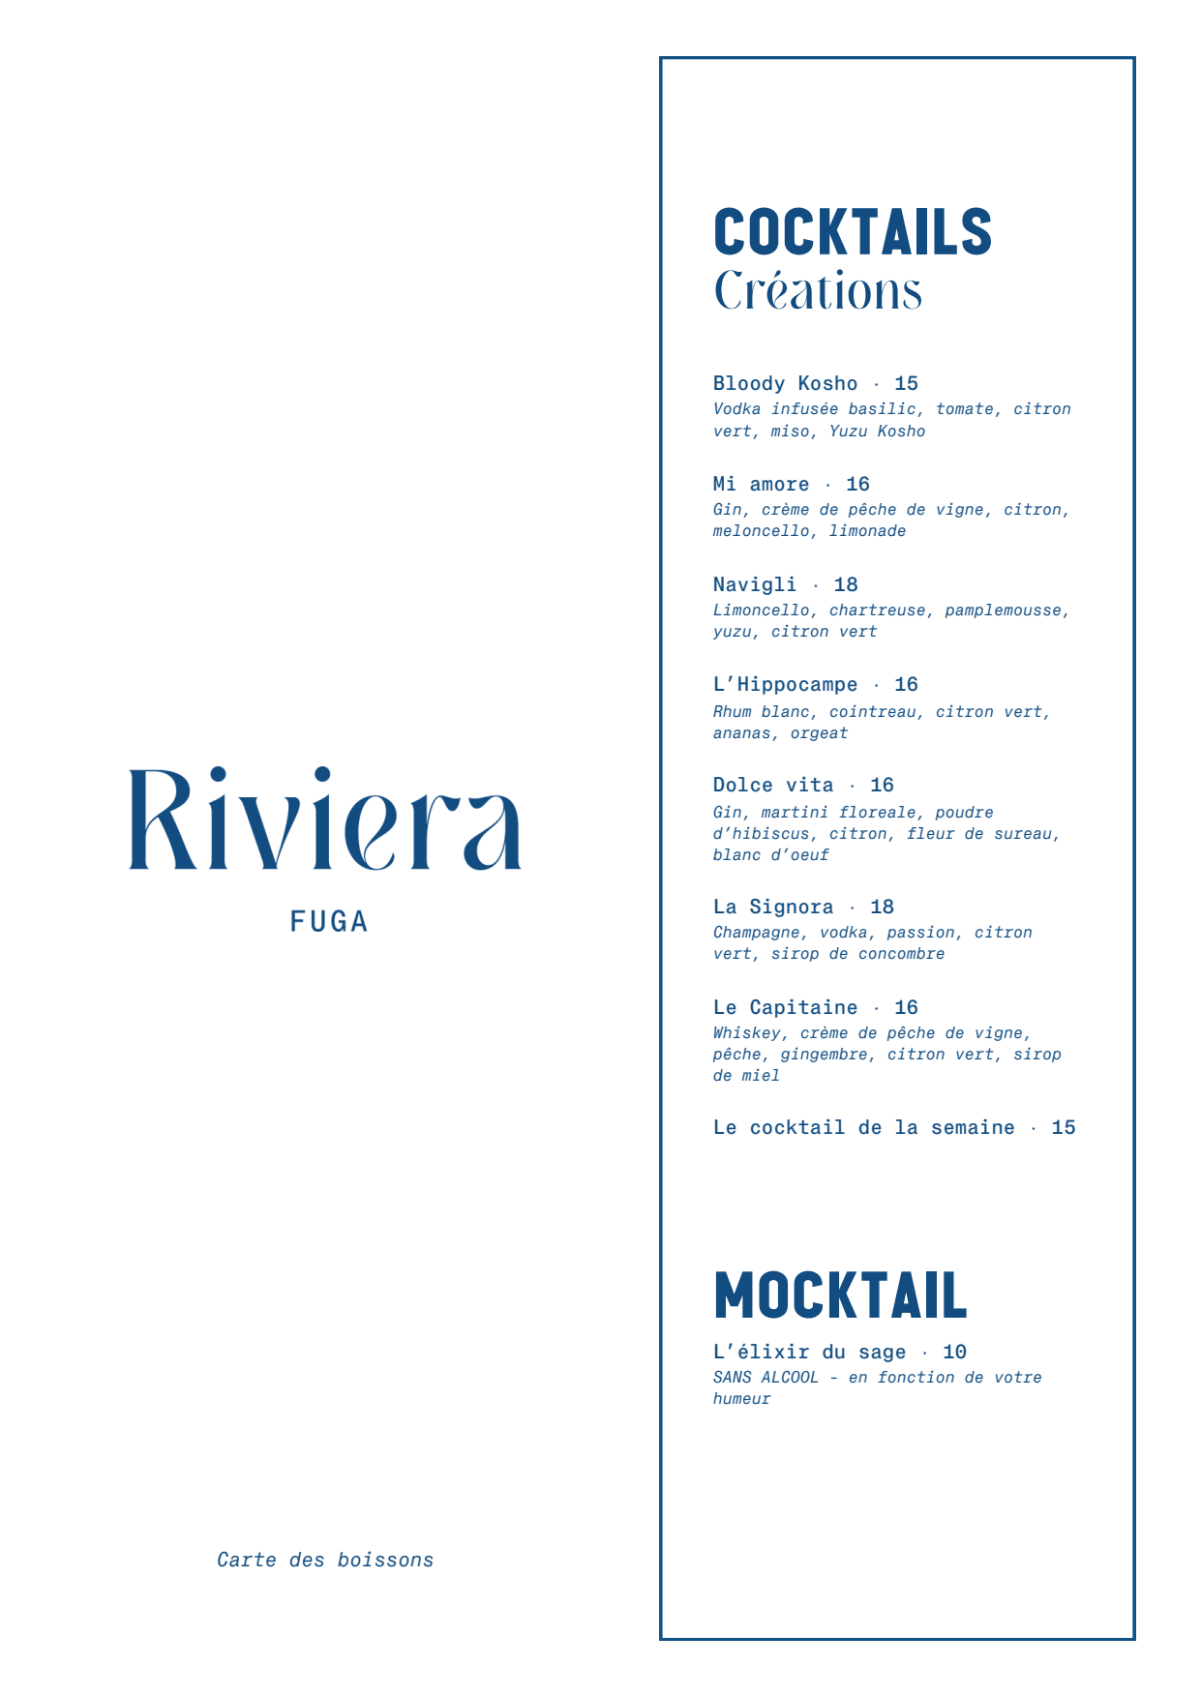 Riviera Fuga menu